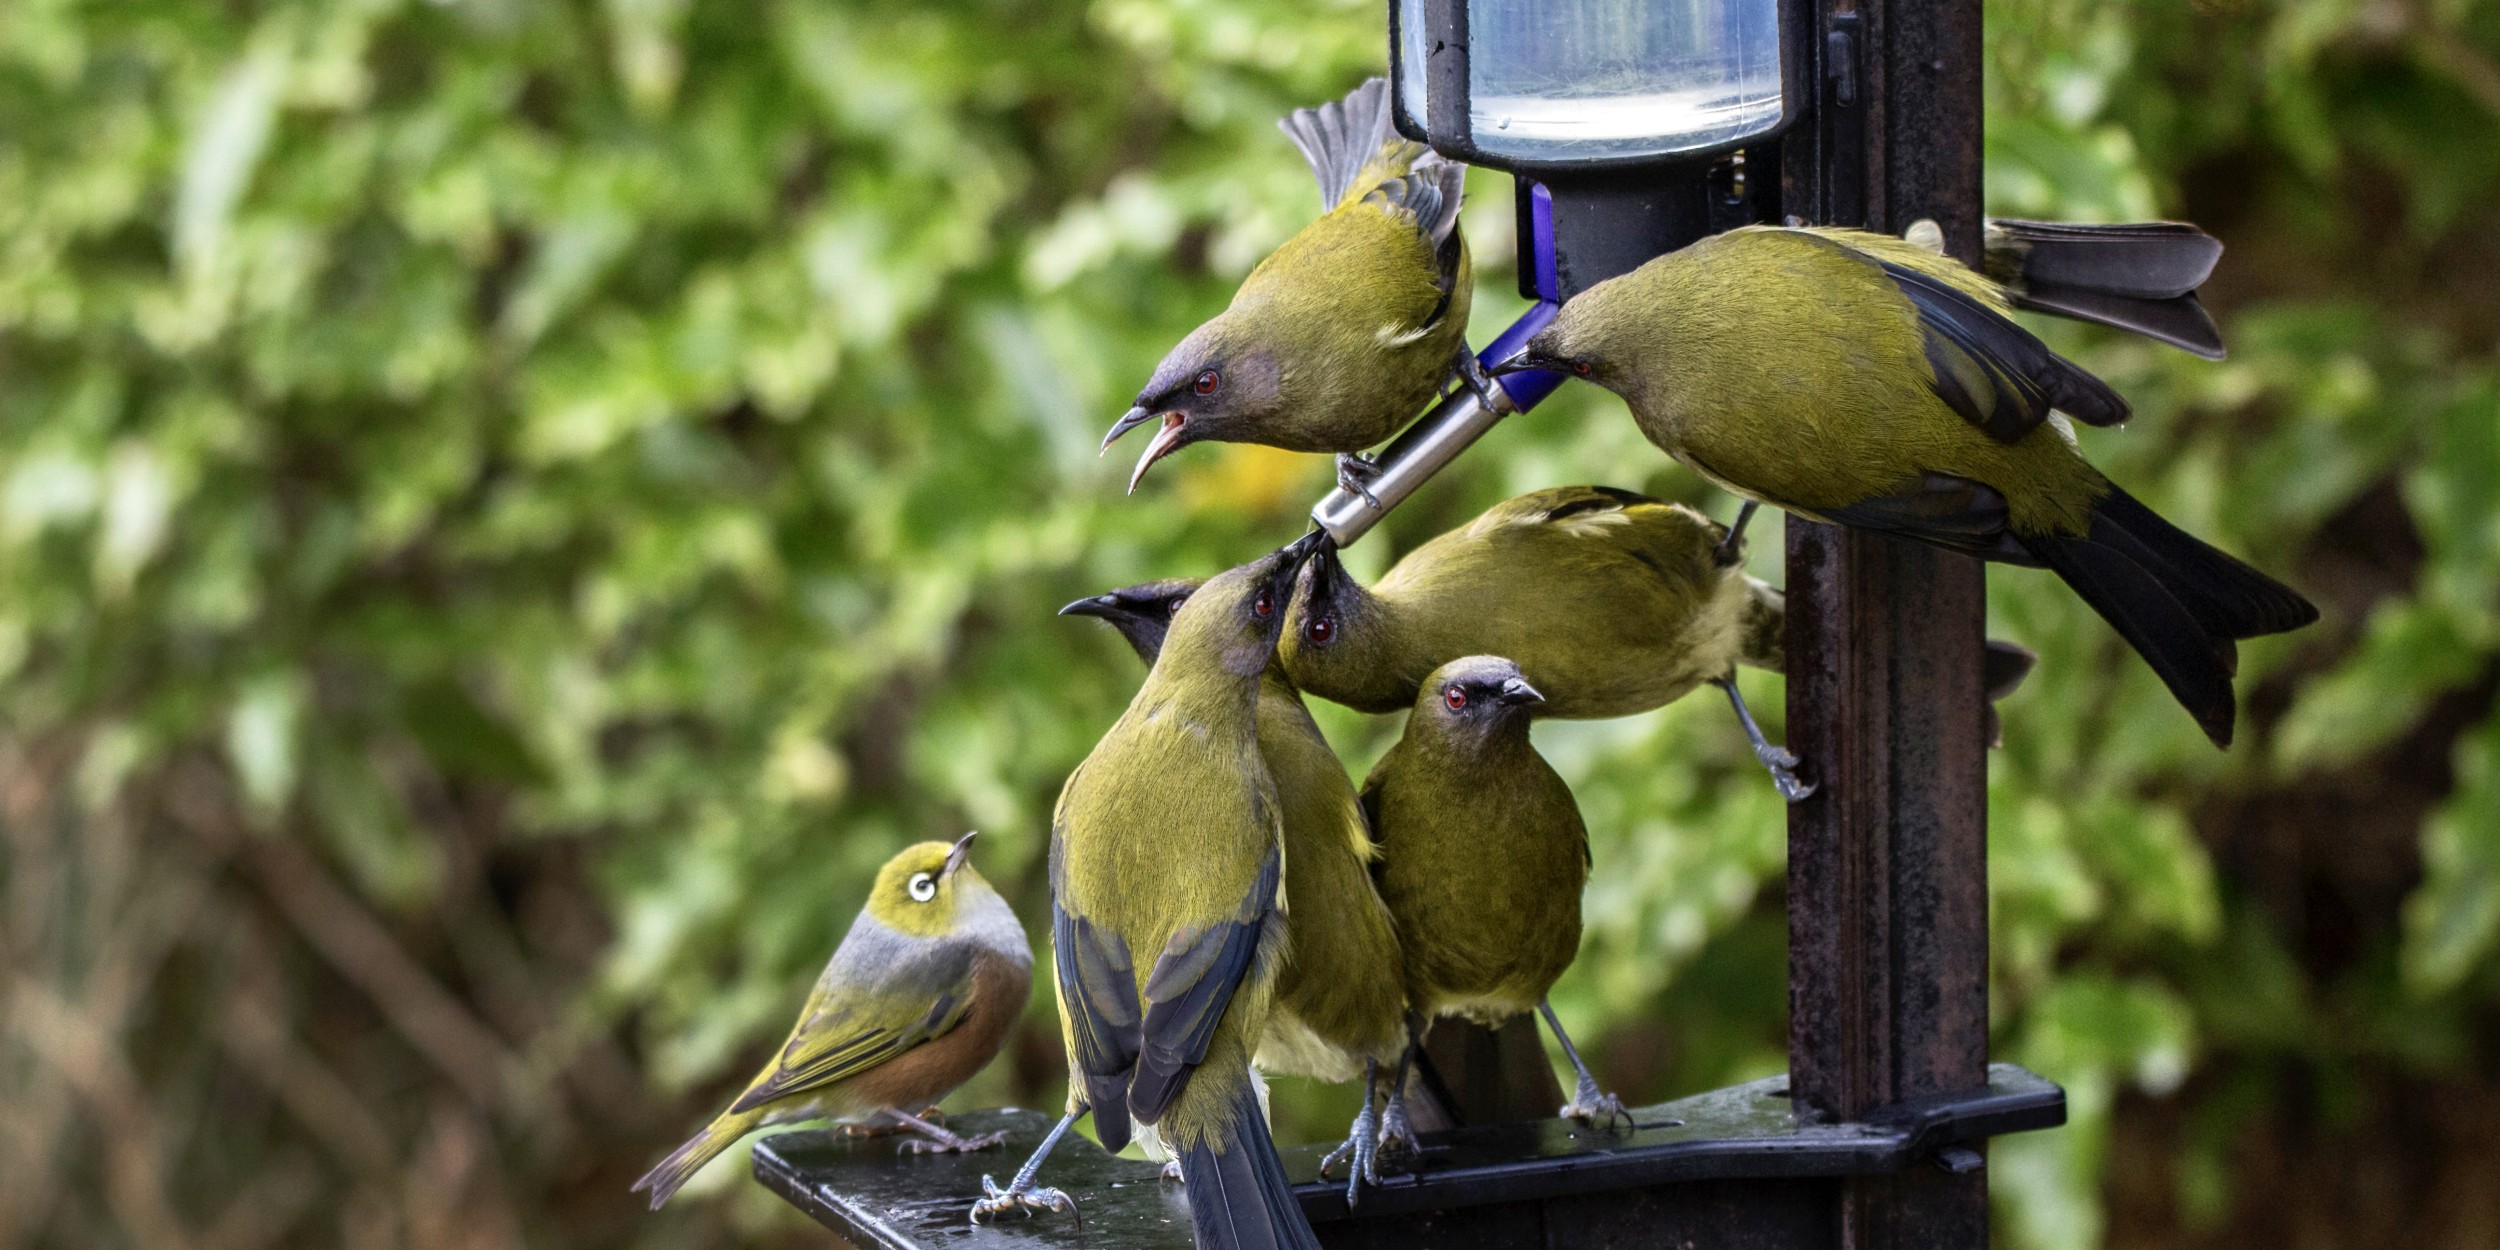 Backyard bird feeding